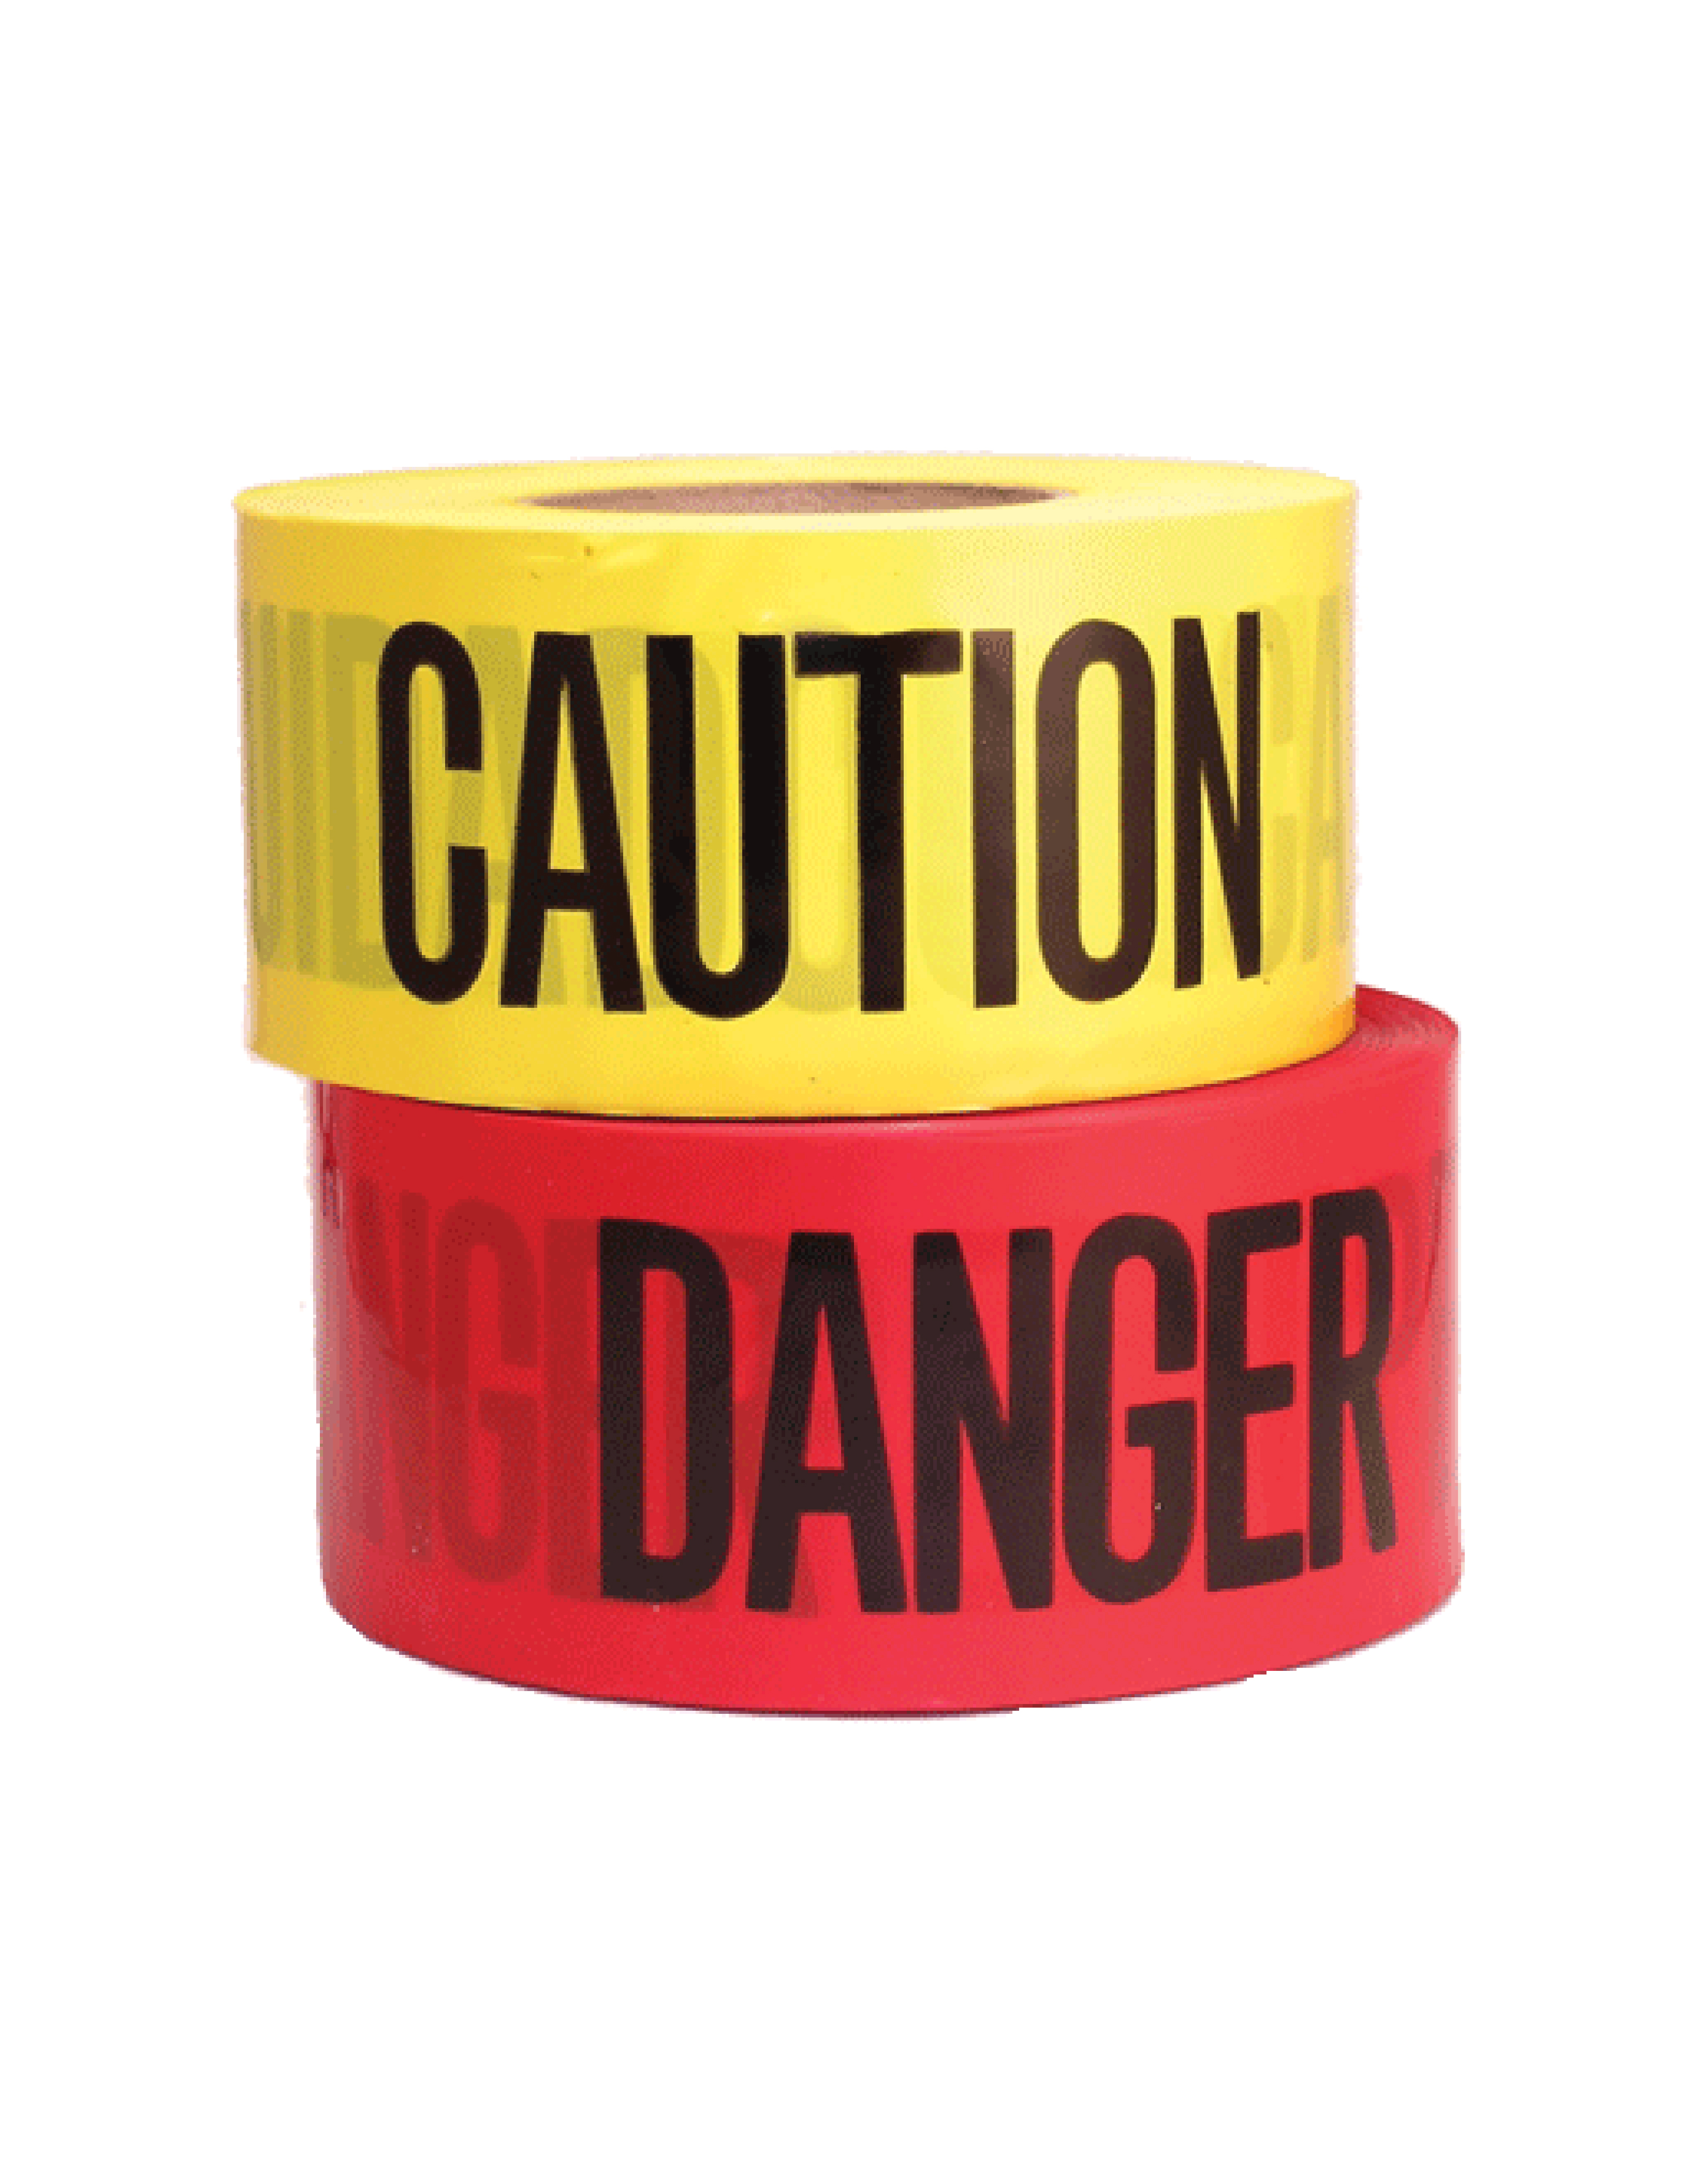 caution-tape